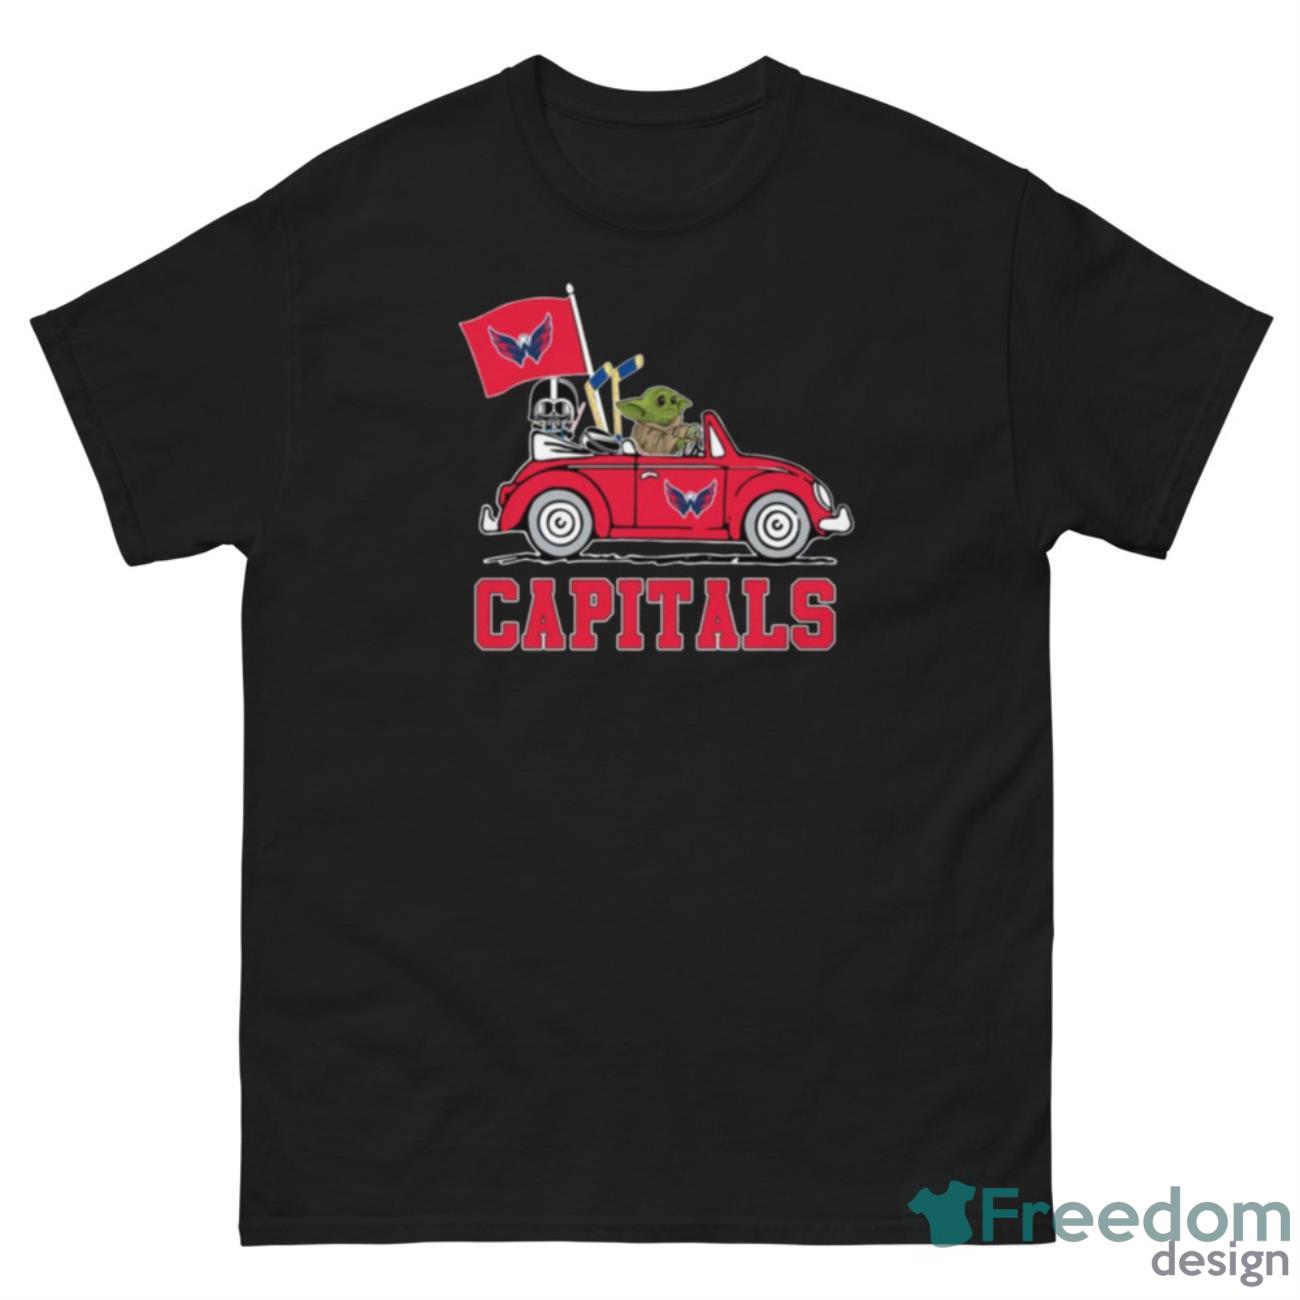 Men's Washington Capitals Gear & Hockey Gifts, Men's Capitals